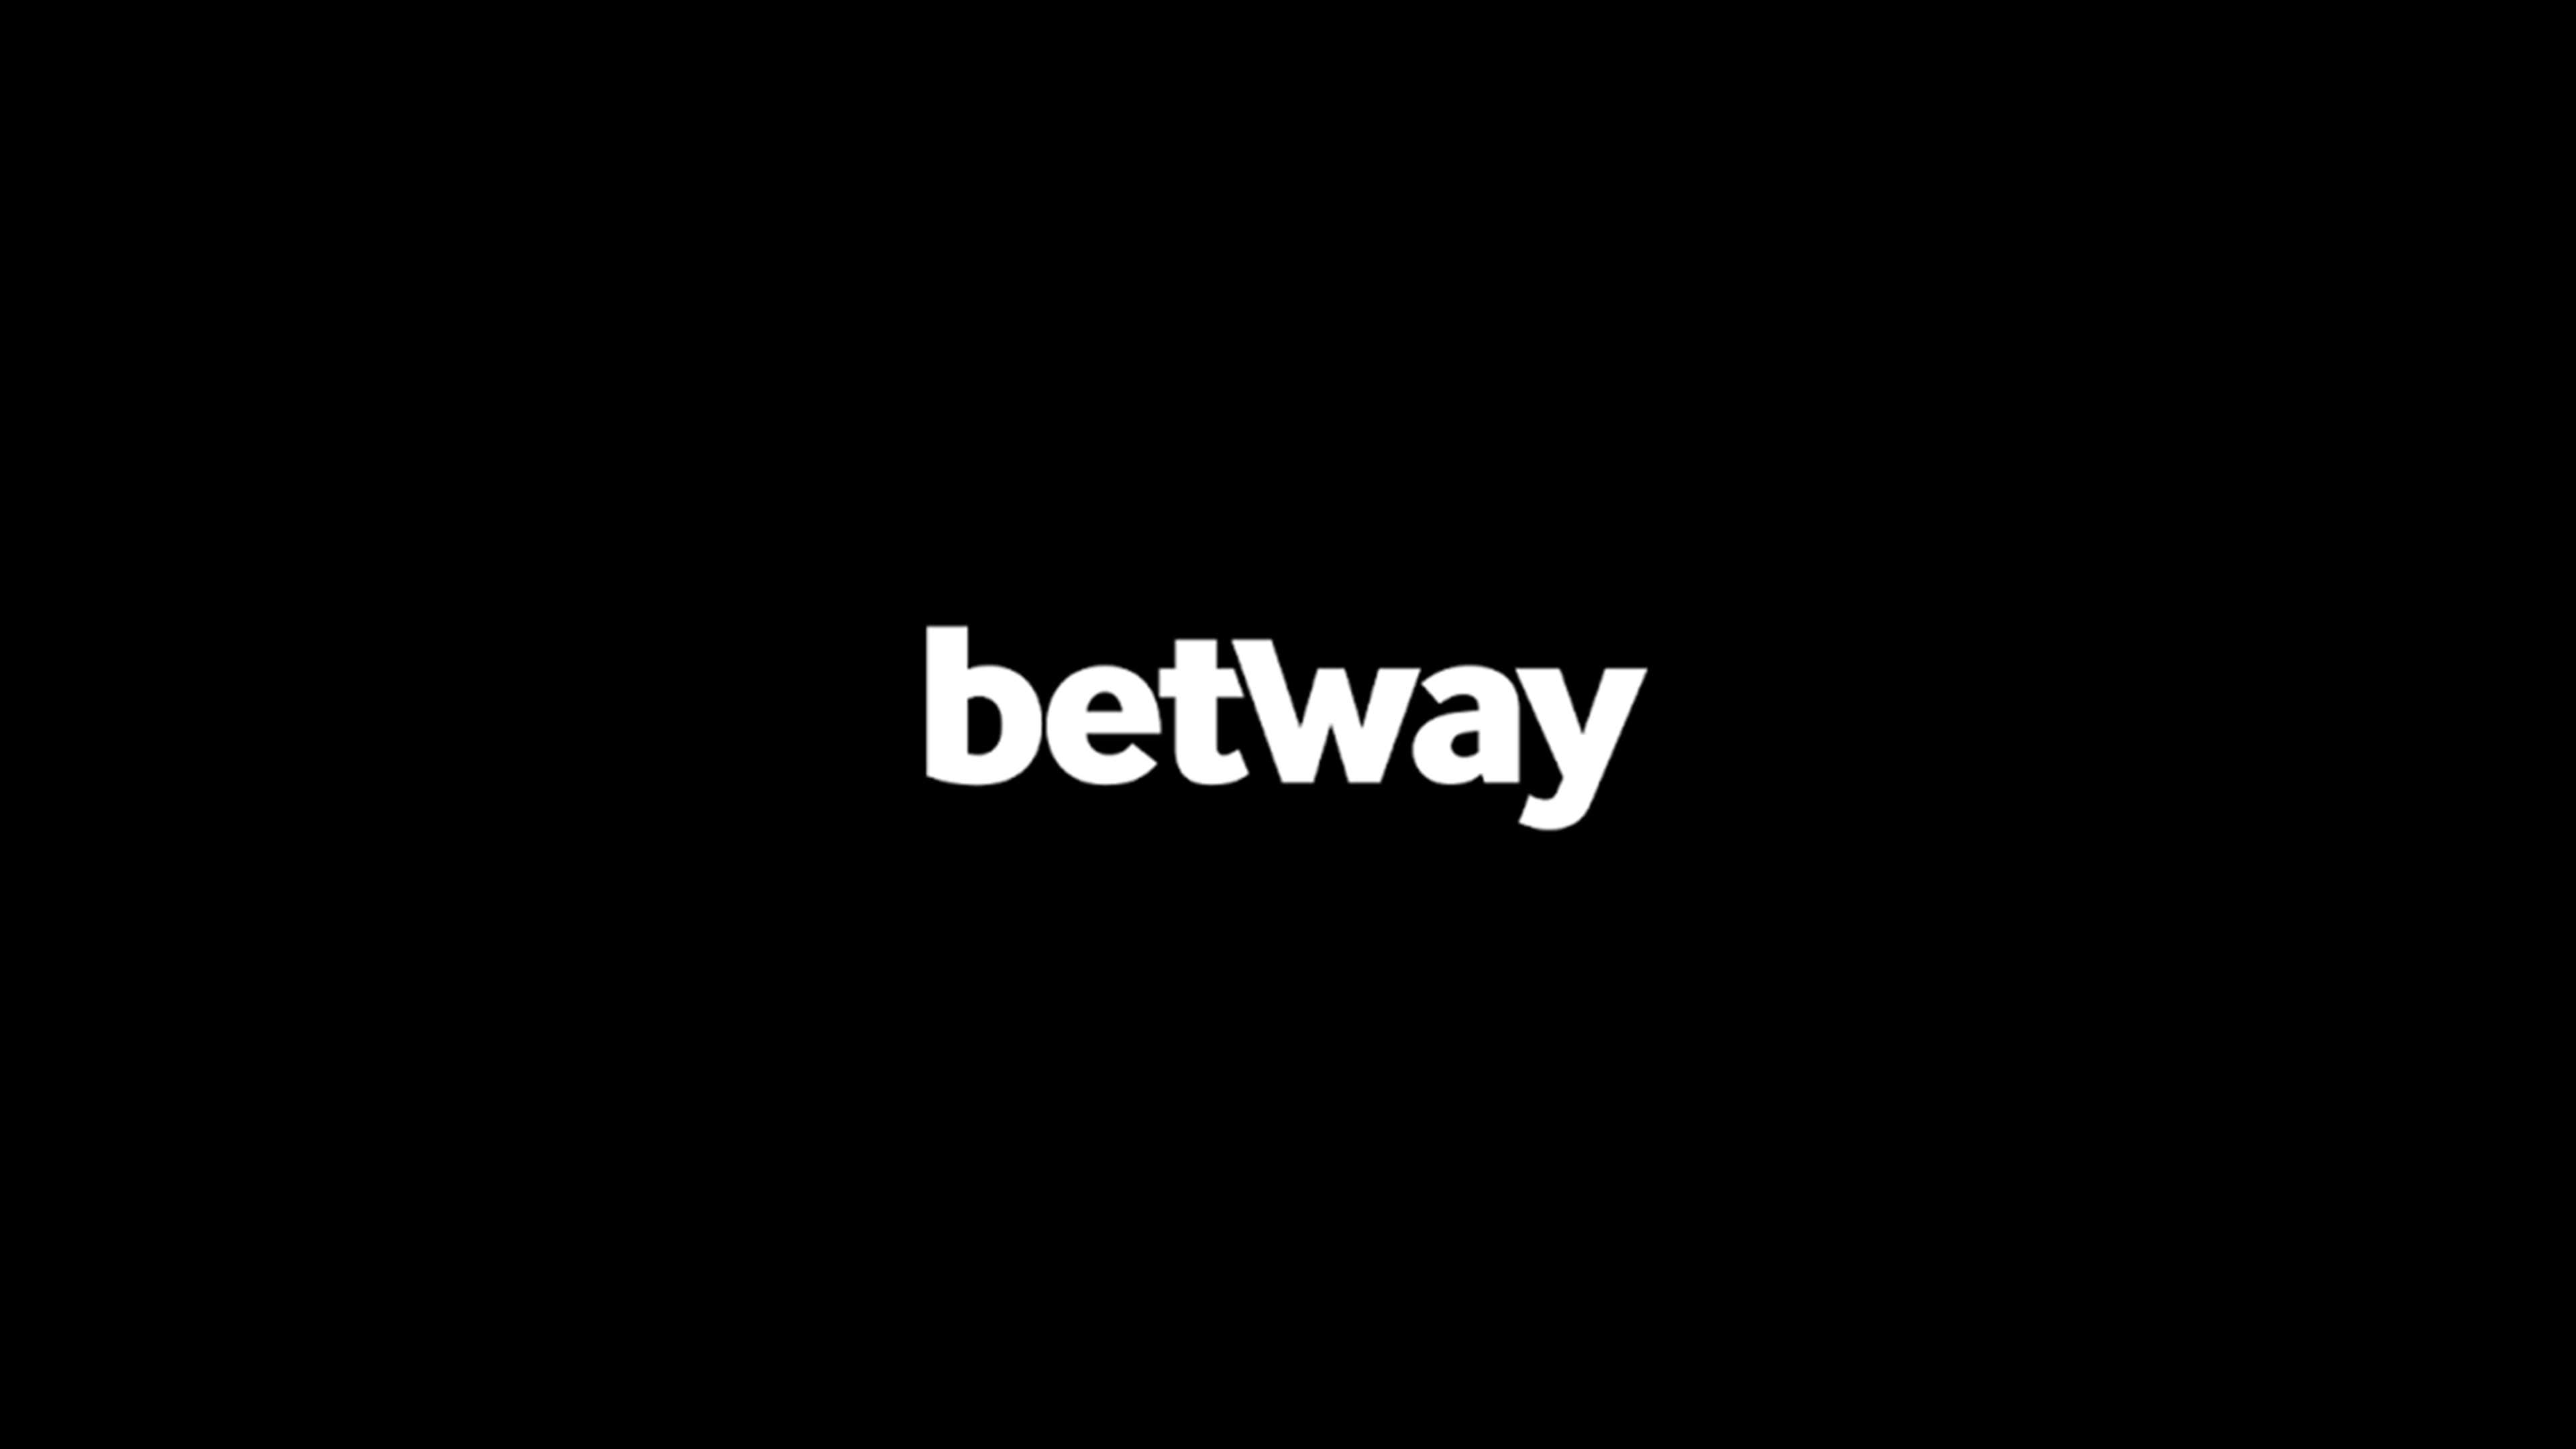 Betway sign up offer